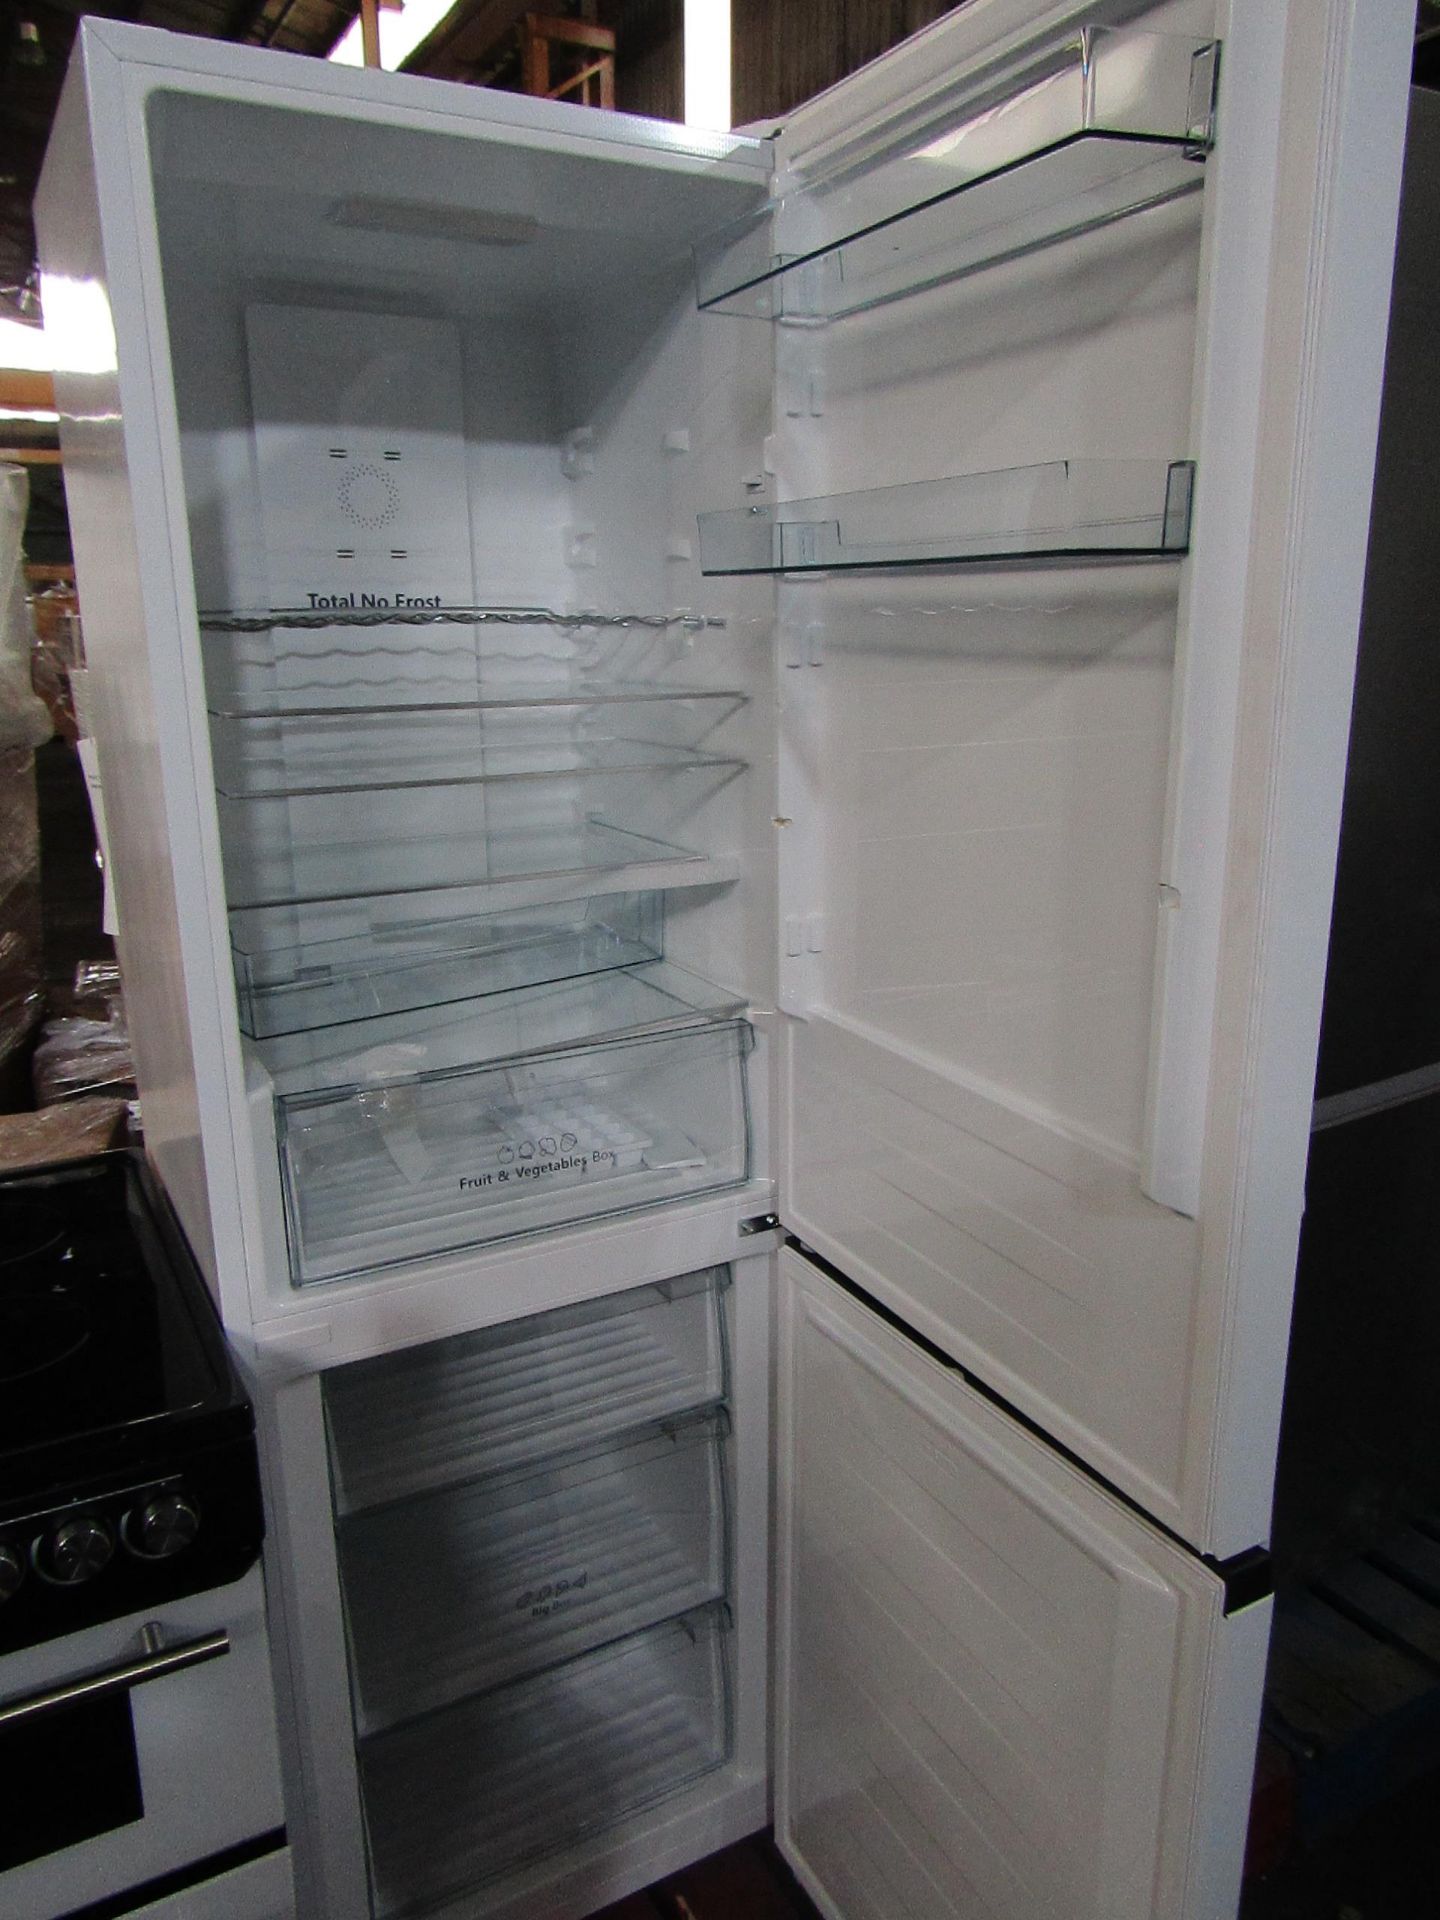 Hisense fridge freezer, tested working for coldness. - Image 2 of 2